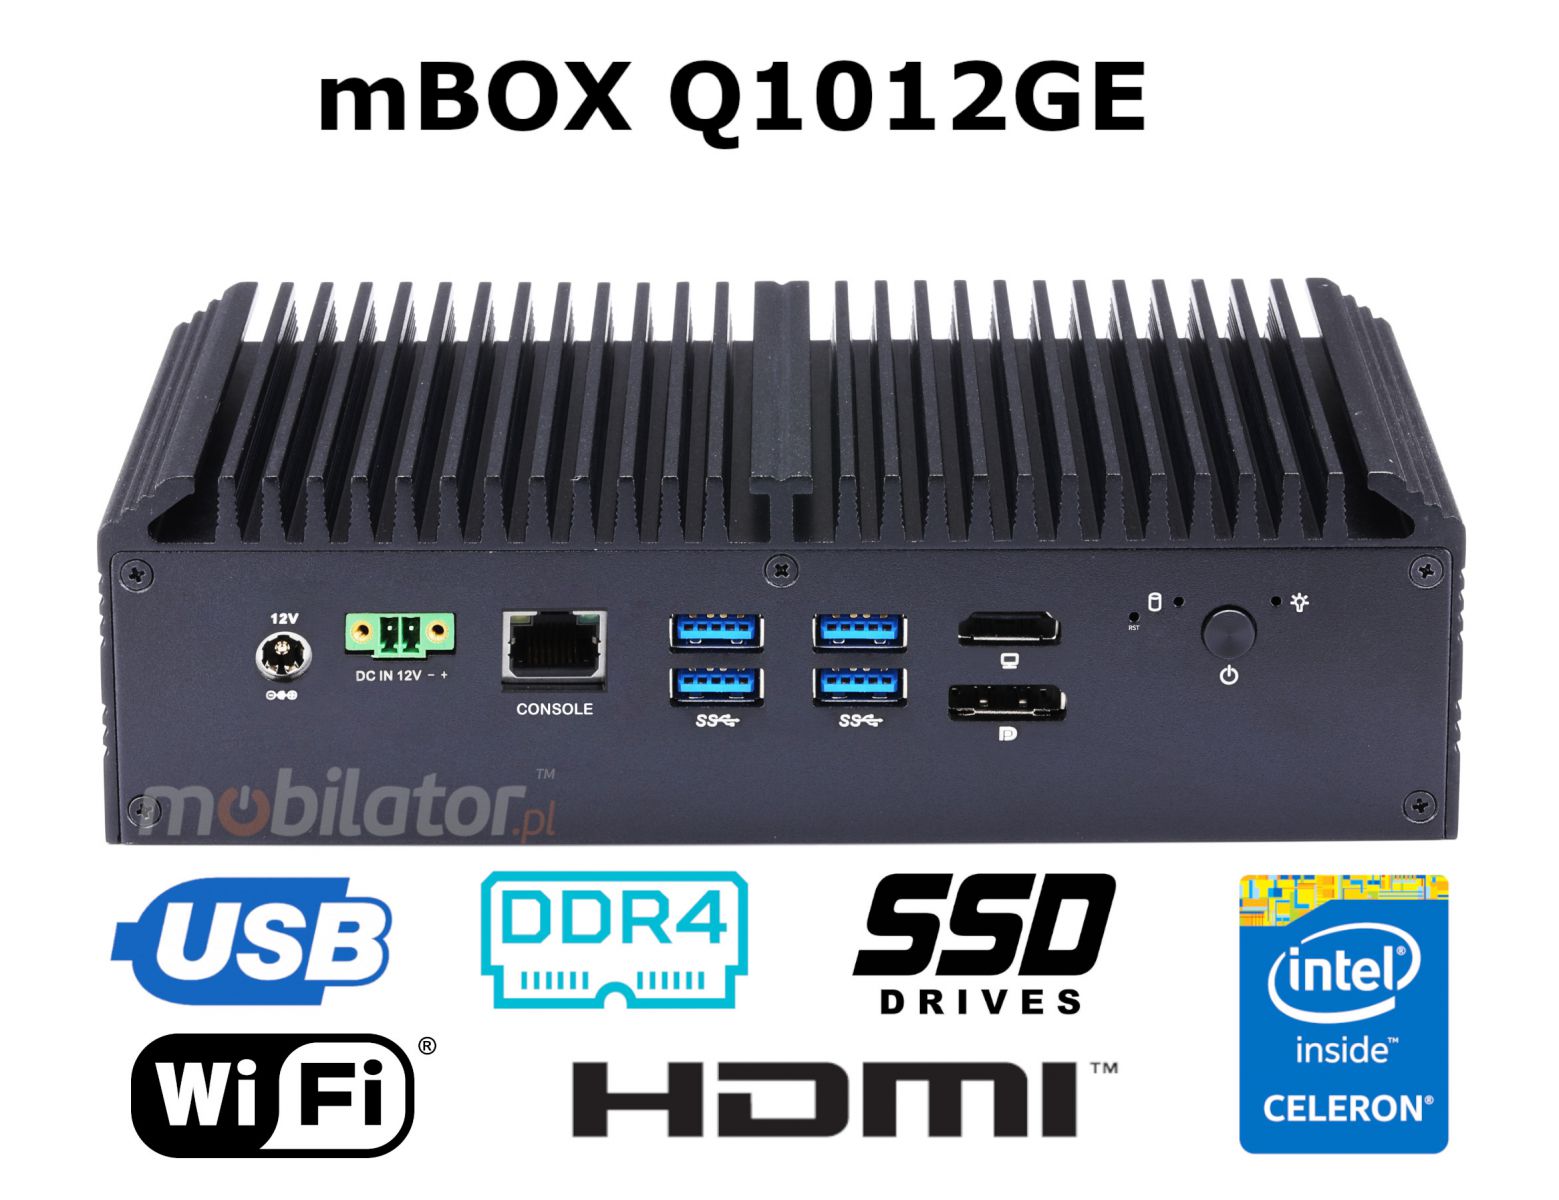 mBOX Q1012GE Version 2, HDMI, Intel Celeron with WiFi